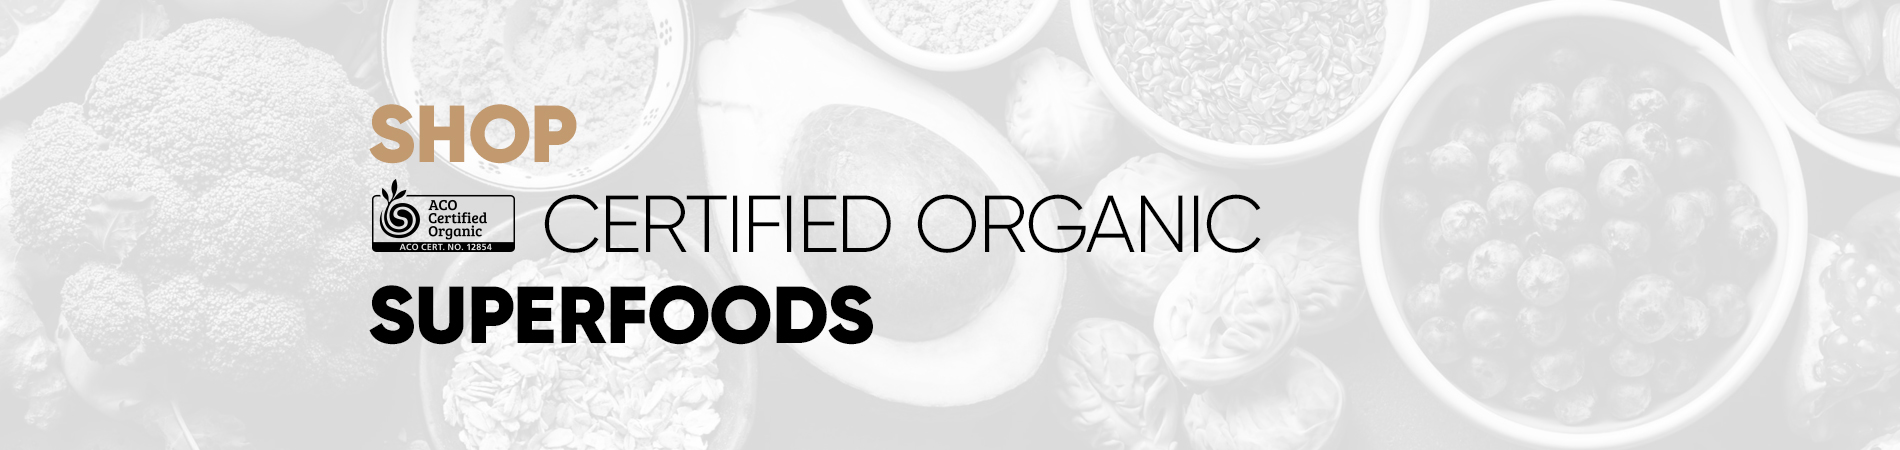 NZ - Shop - Certified Organic Superfoods 